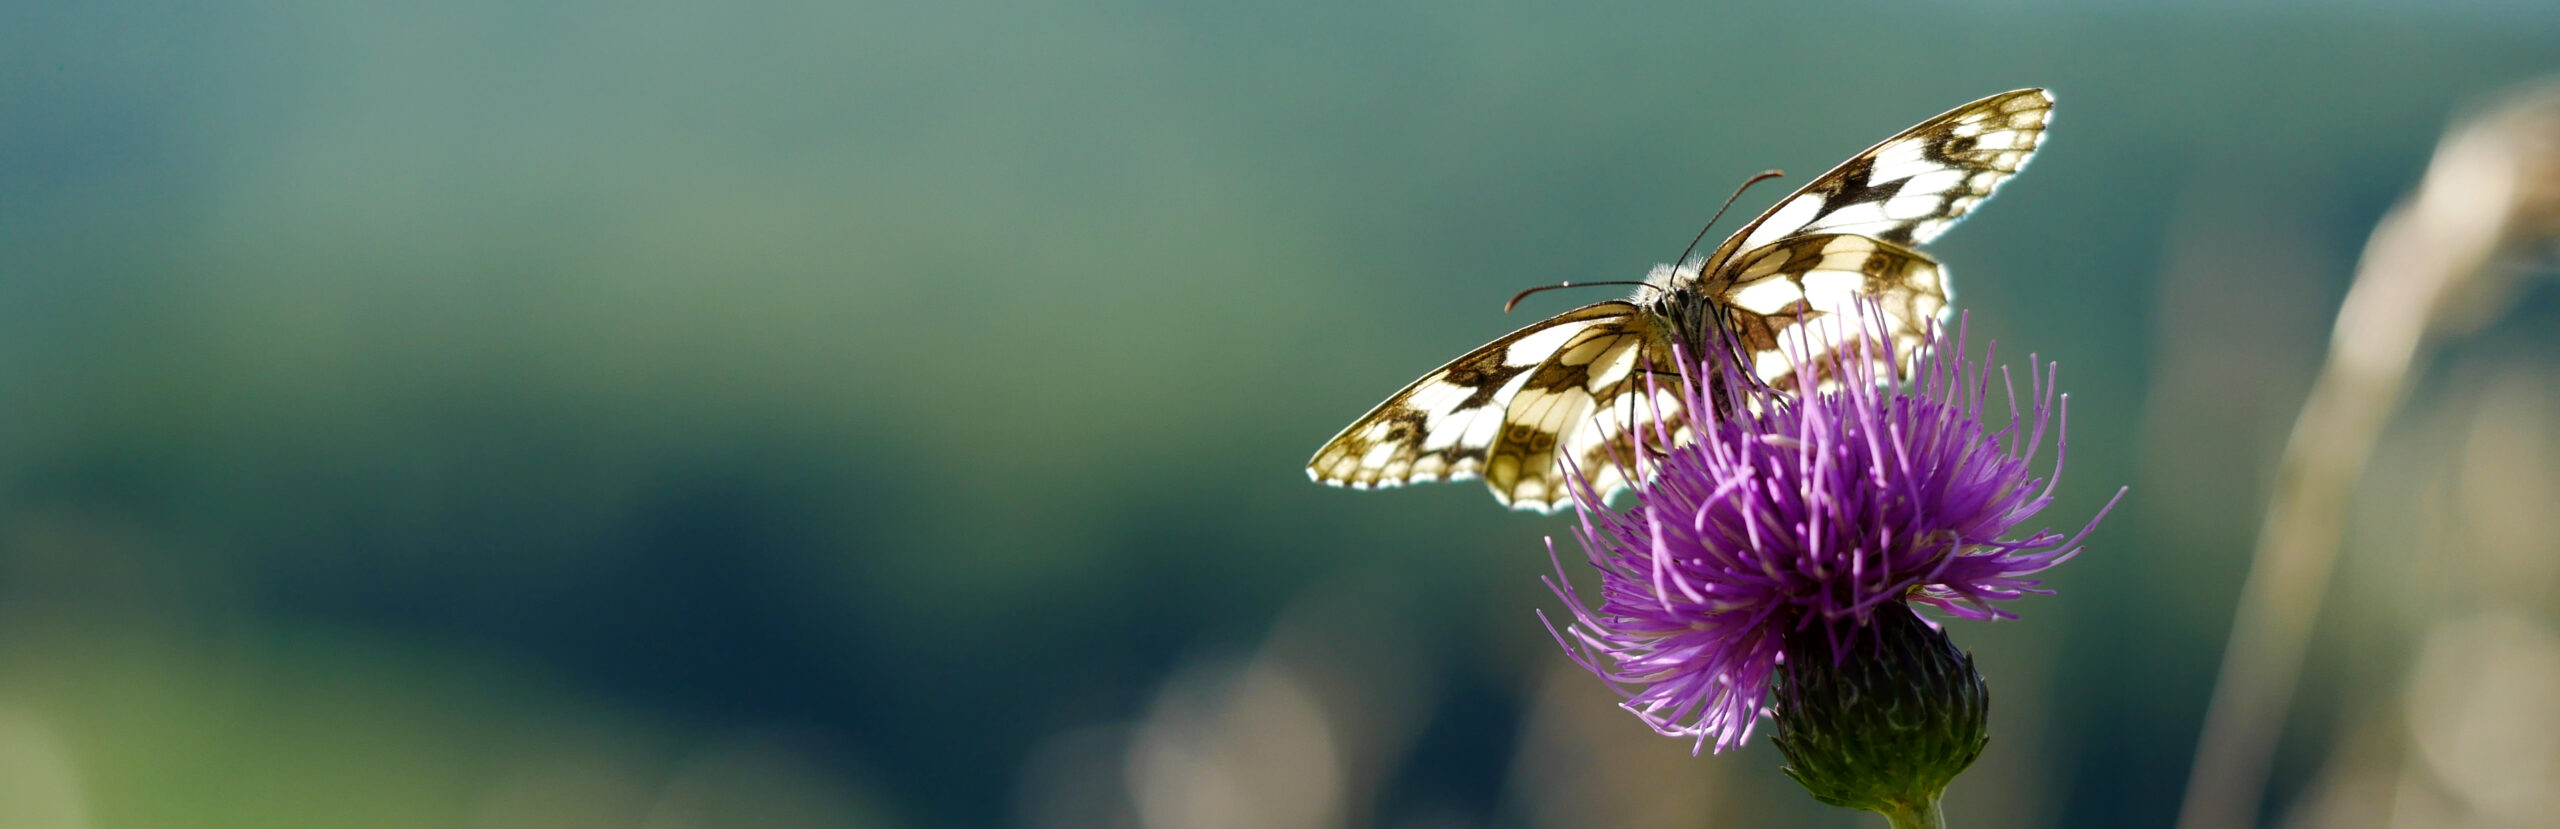 Butterfly on a flower (Photo: Uzzy Arztmann)